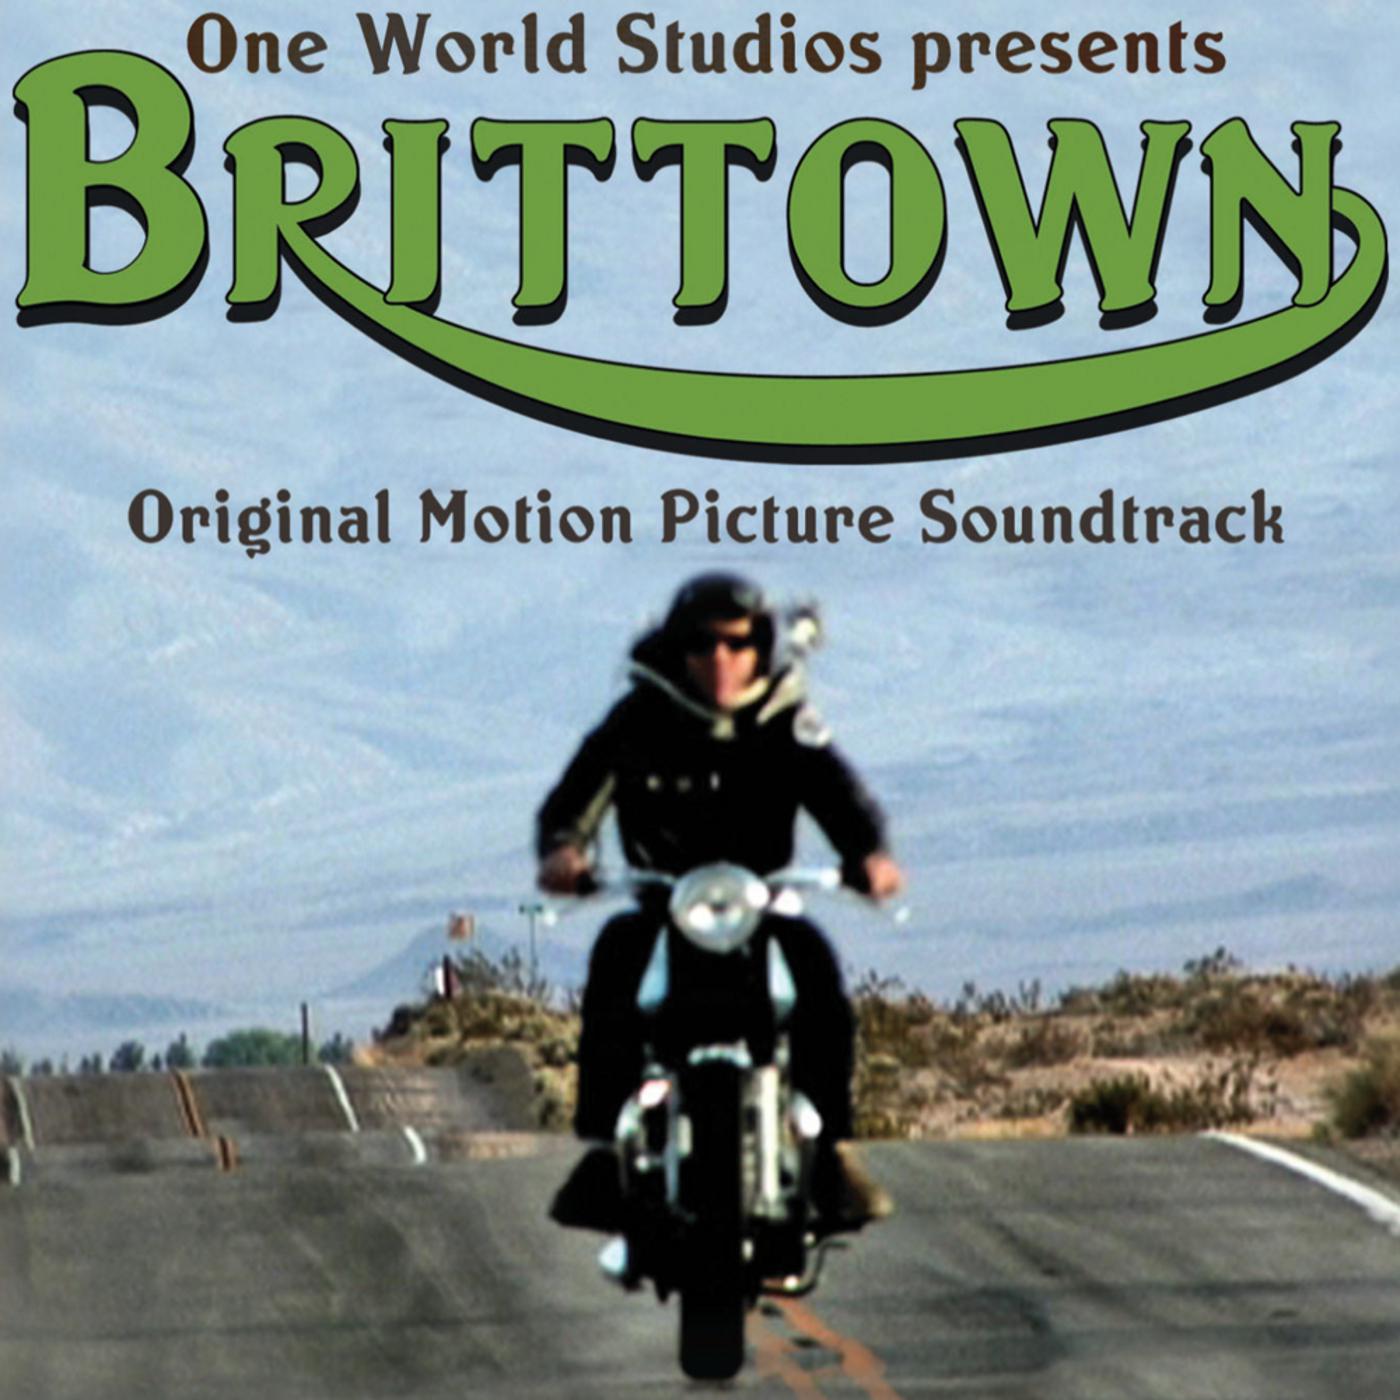 Brittown Original Motion Picture Soundtrack